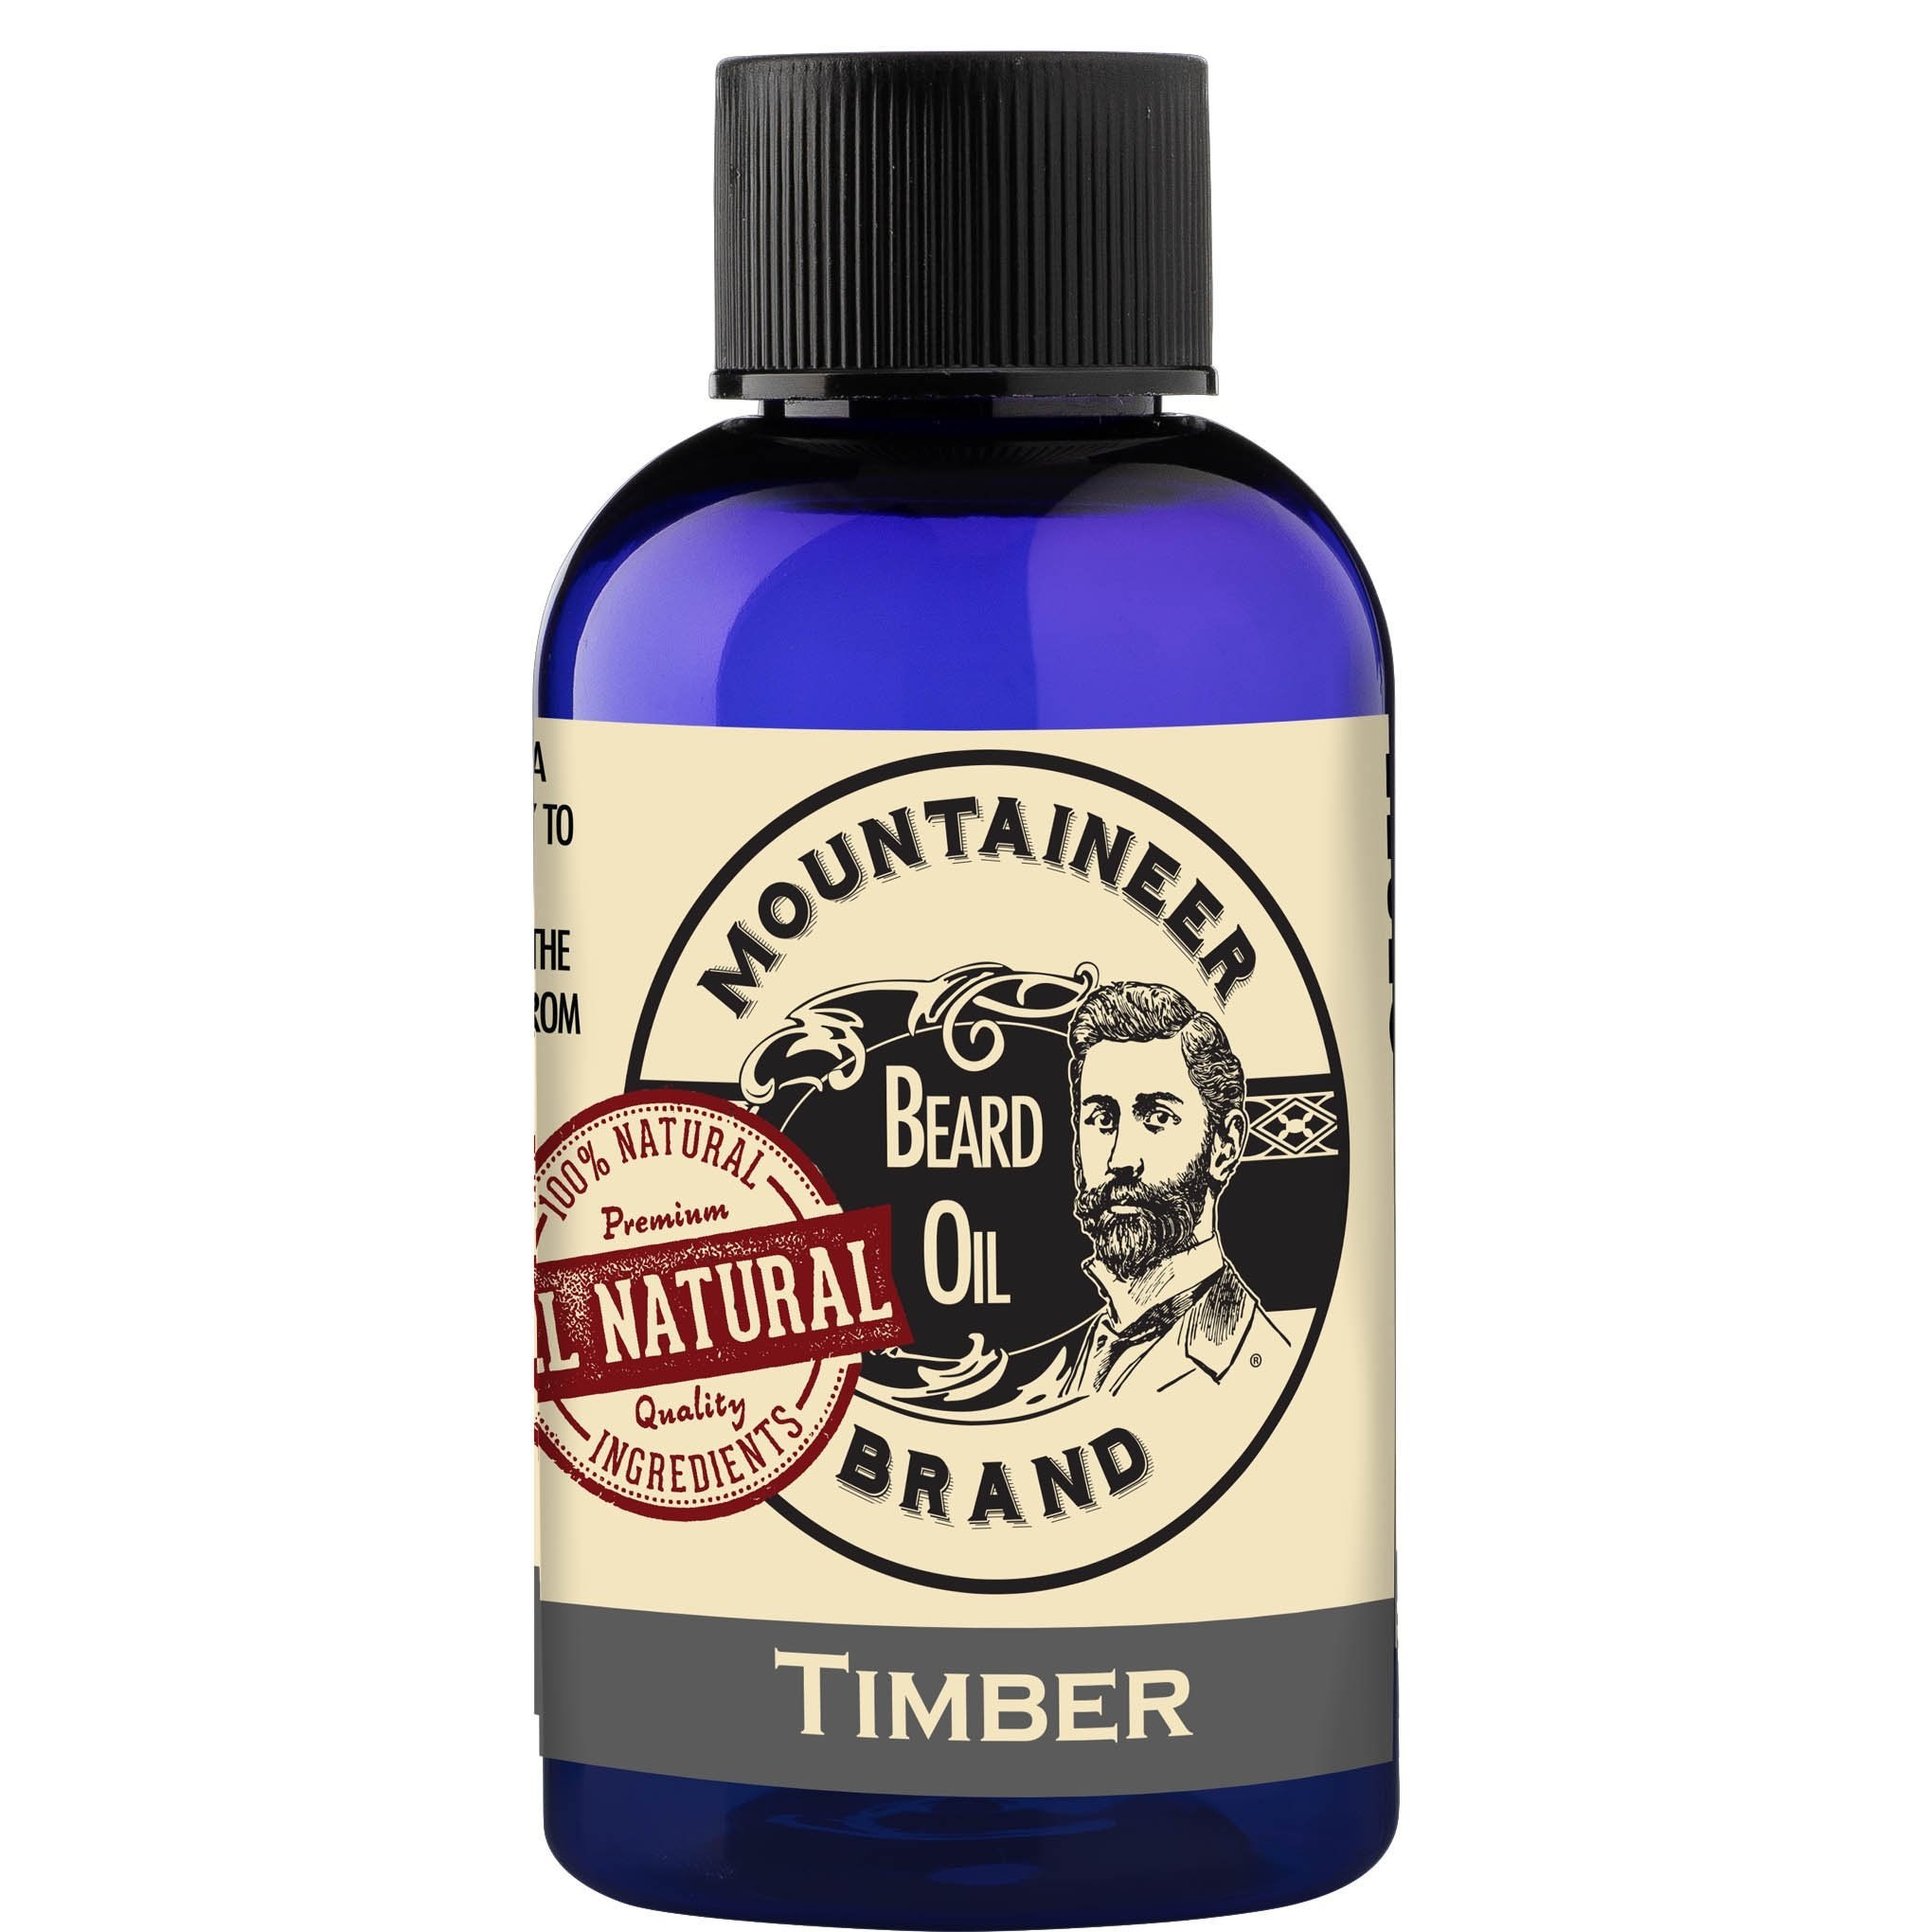 Mountaineer Brand Timber Beard Oil 60 ml